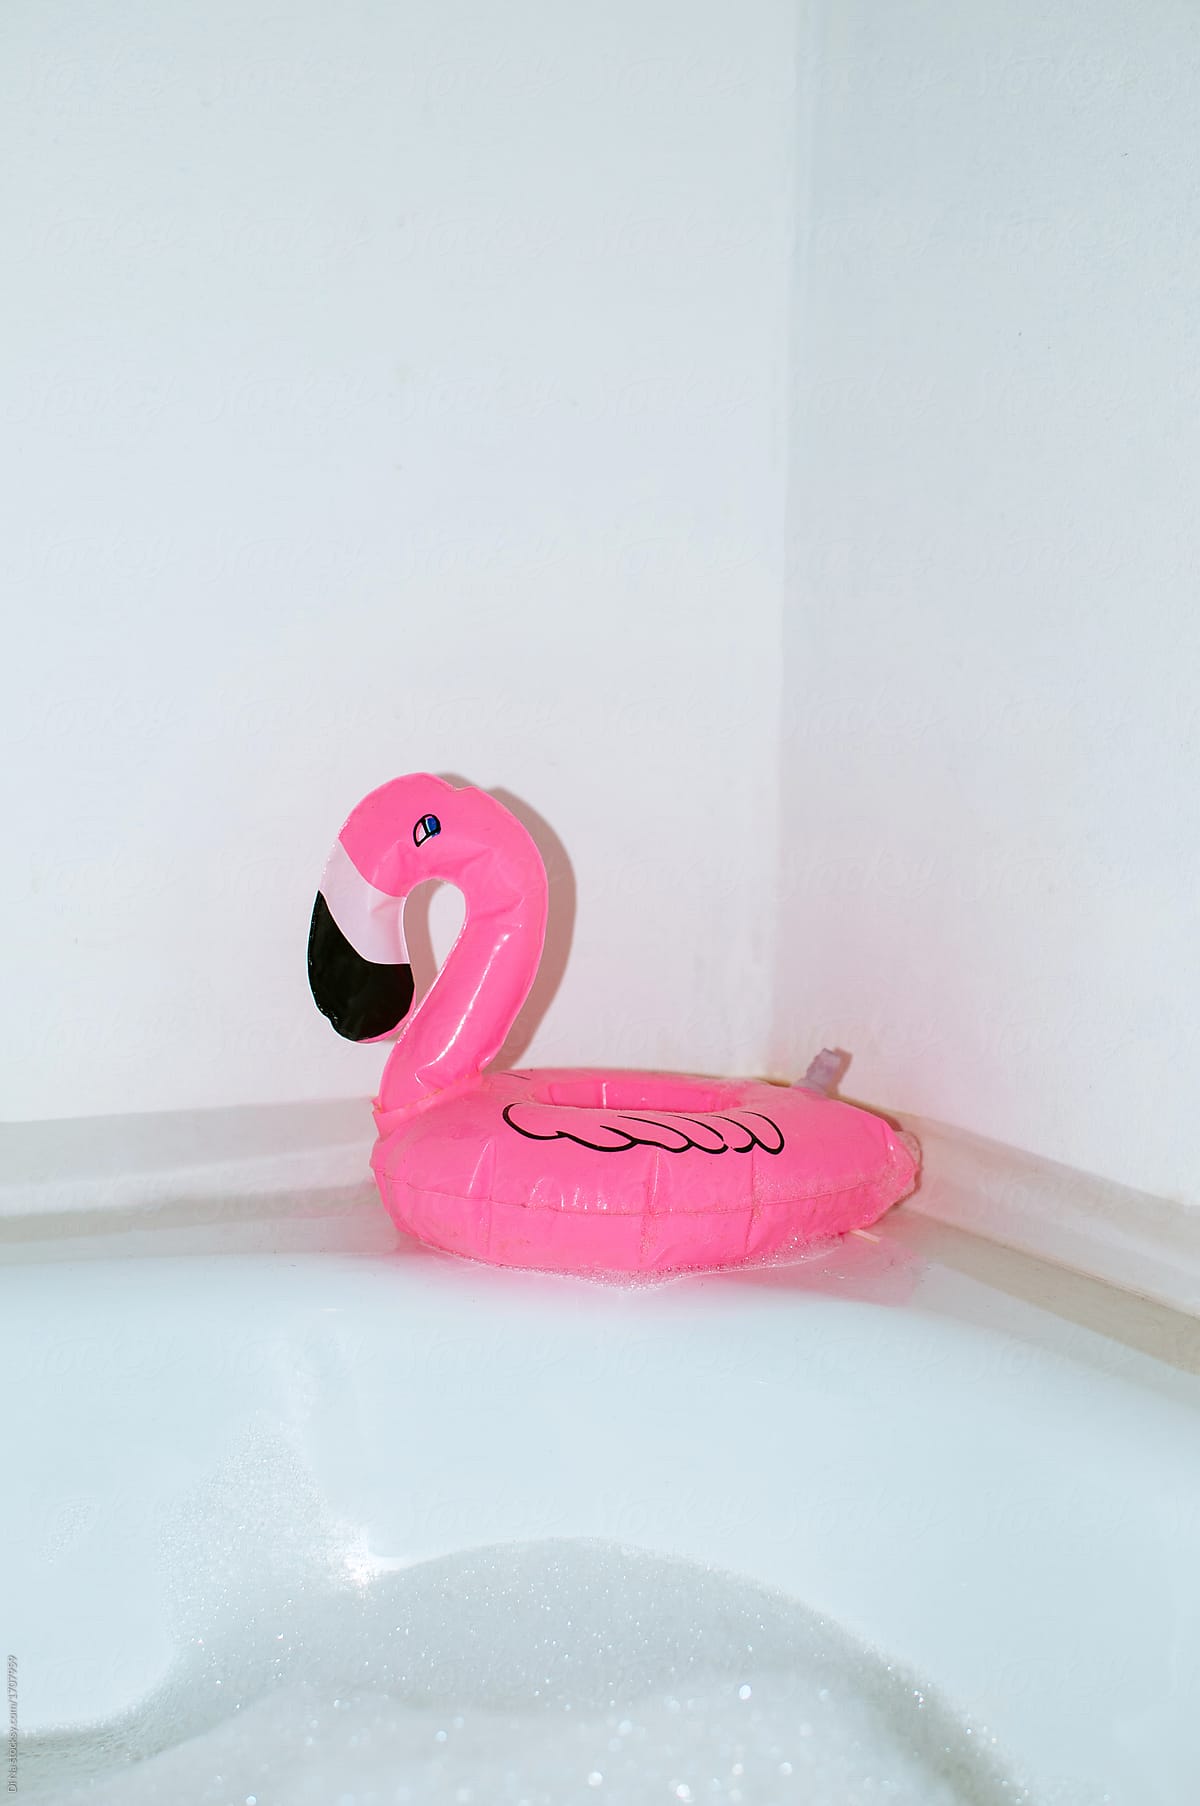 Pink flamingo toy in bathroom